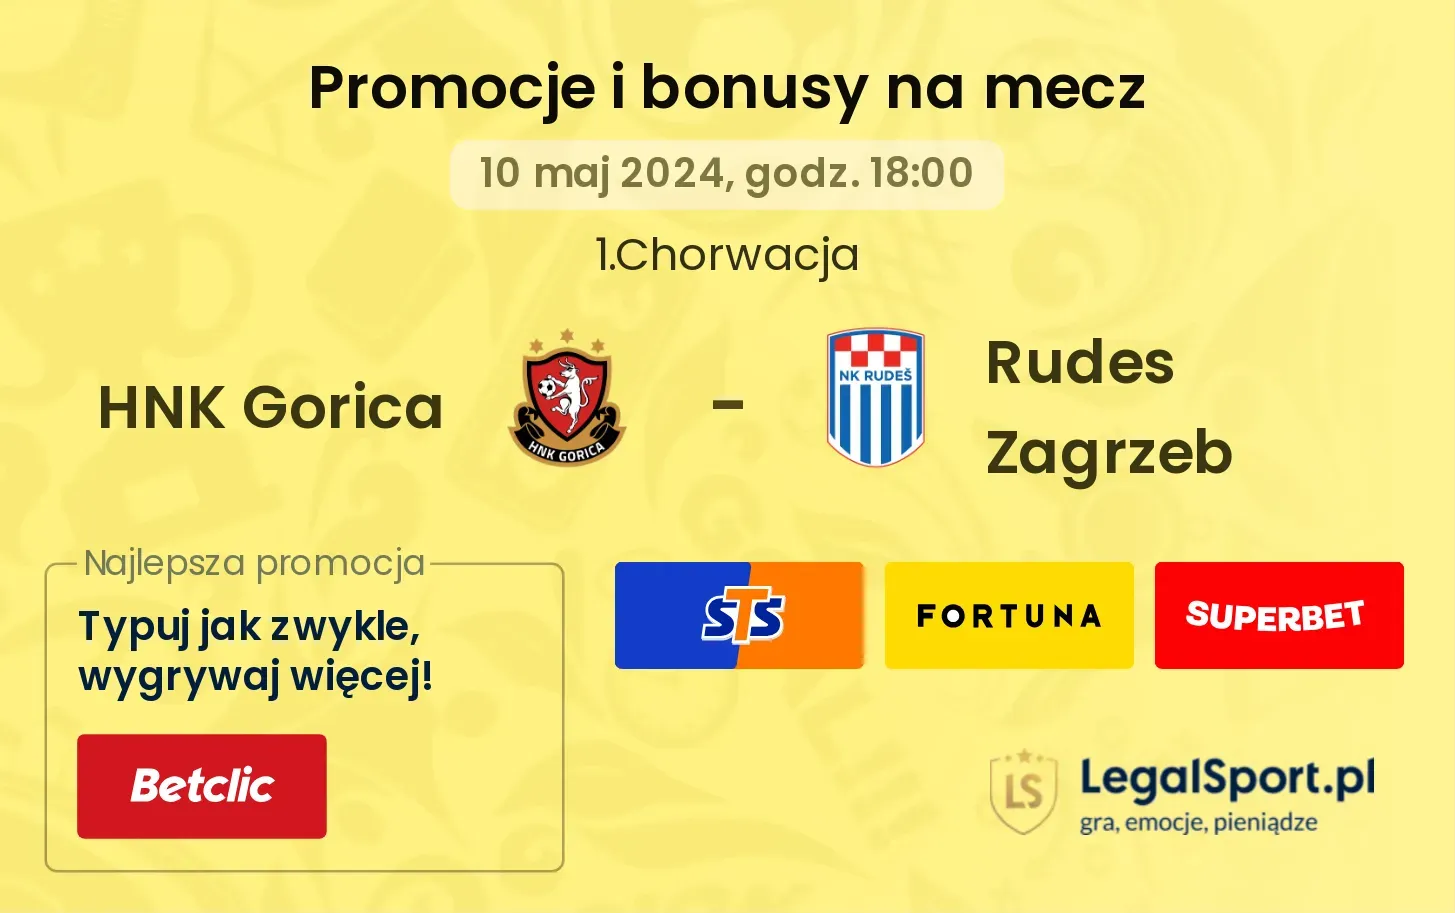 HNK Gorica - Rudes Zagrzeb promocje bonusy na mecz